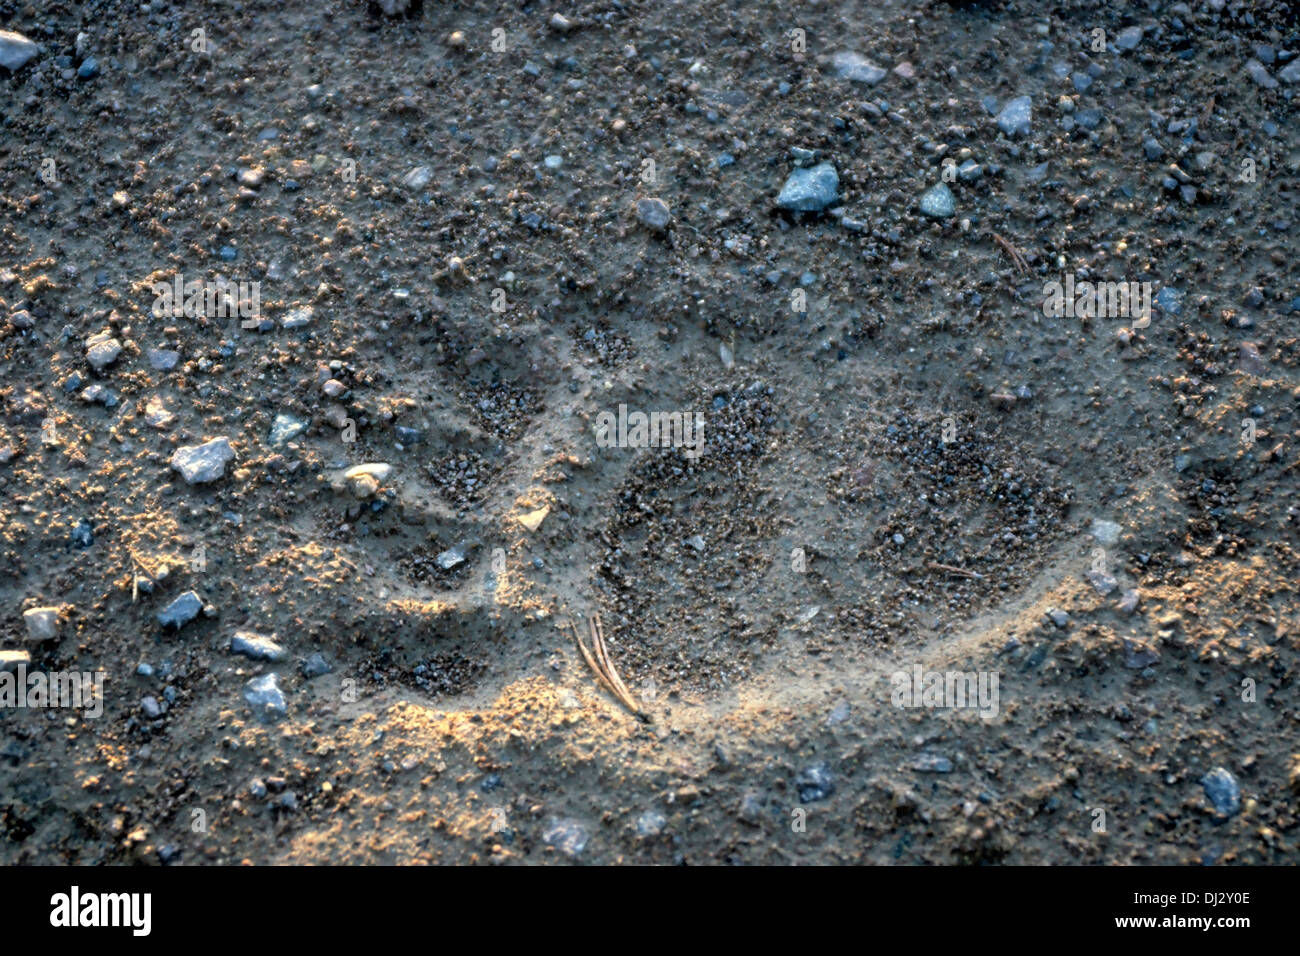 Footprint dell'orso bruno, l'orso bruno (Ursus arctos), Fußspur des Braunbärs, Braunbär (Ursus arctos) Foto Stock